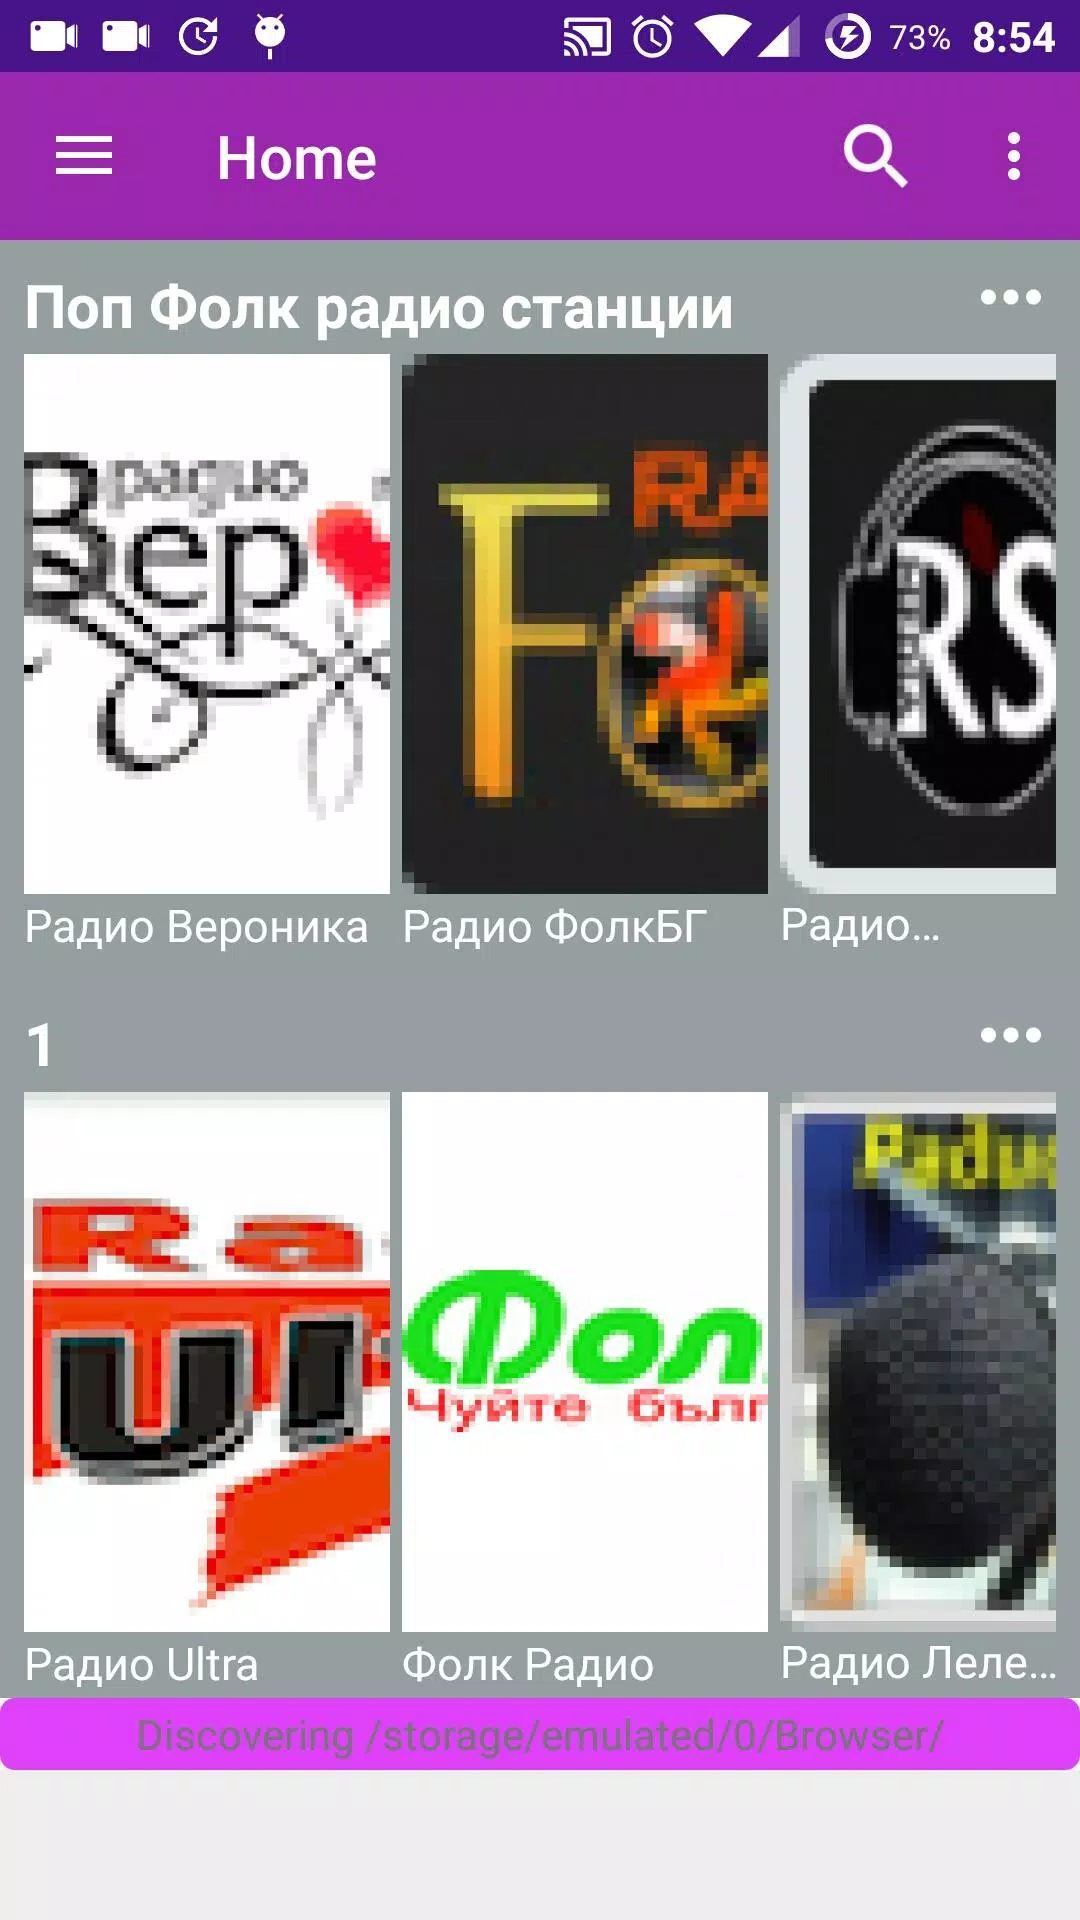 Чалга радио. Поп фолк радио станции. APK for Android Download